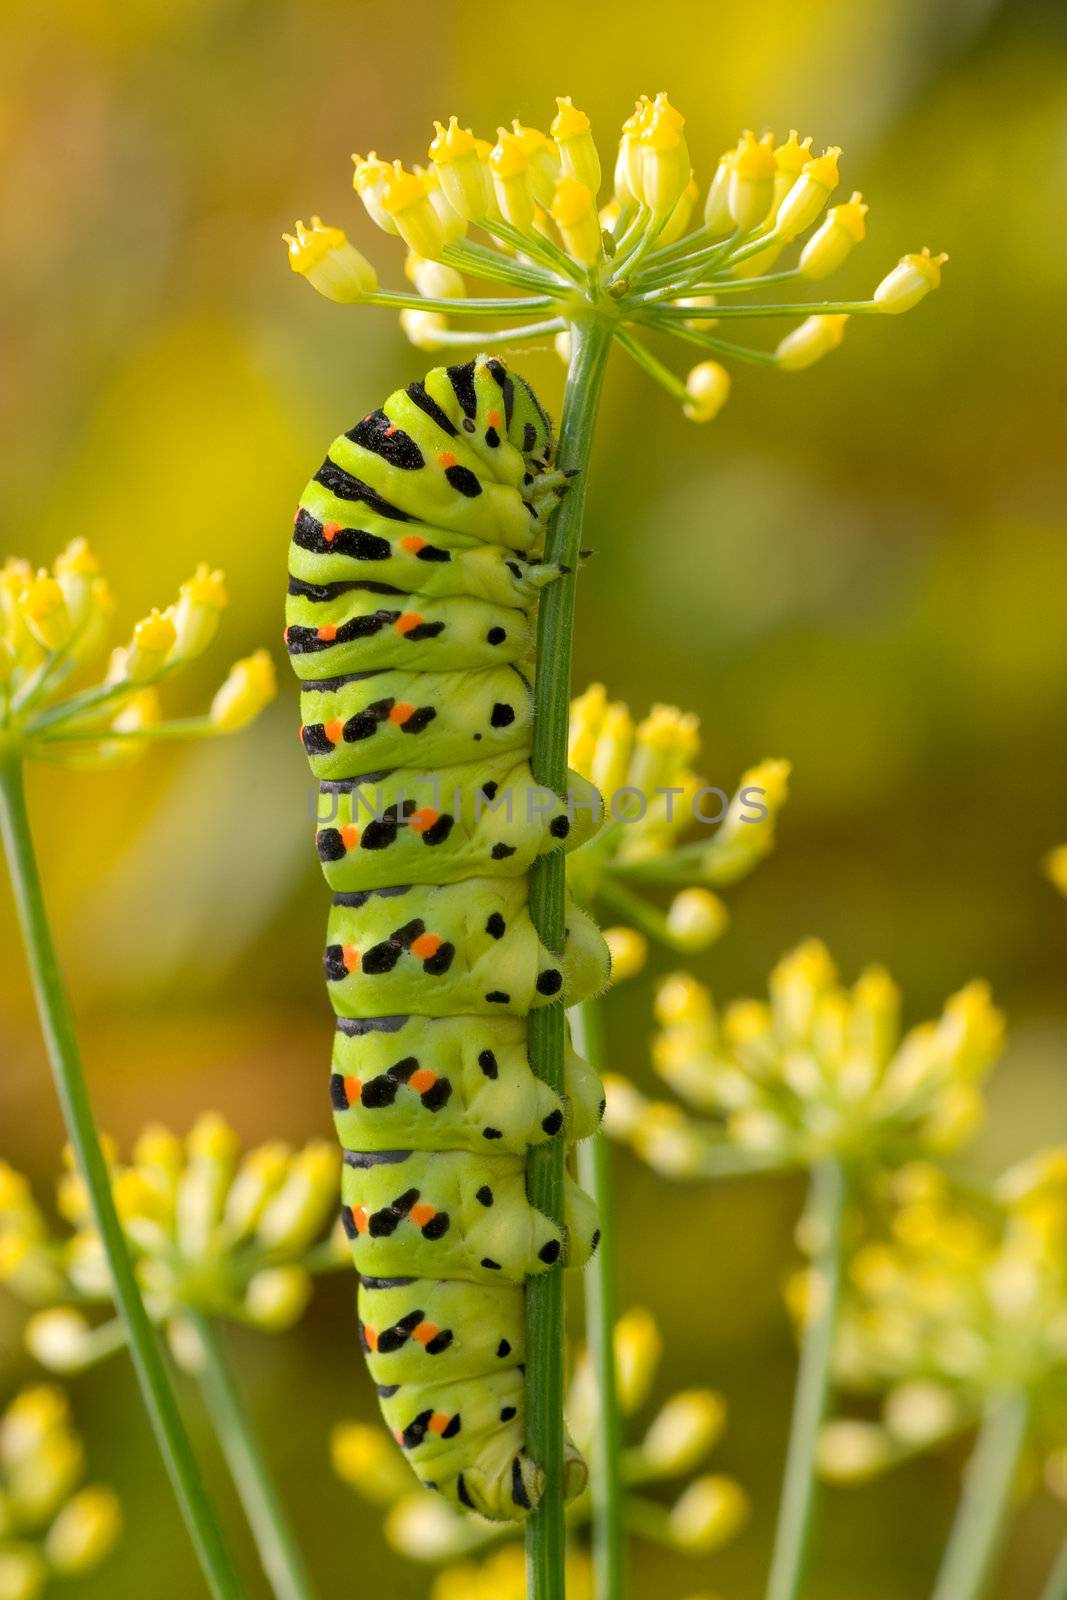 Old World Swallowtail caterpillar by camerziga